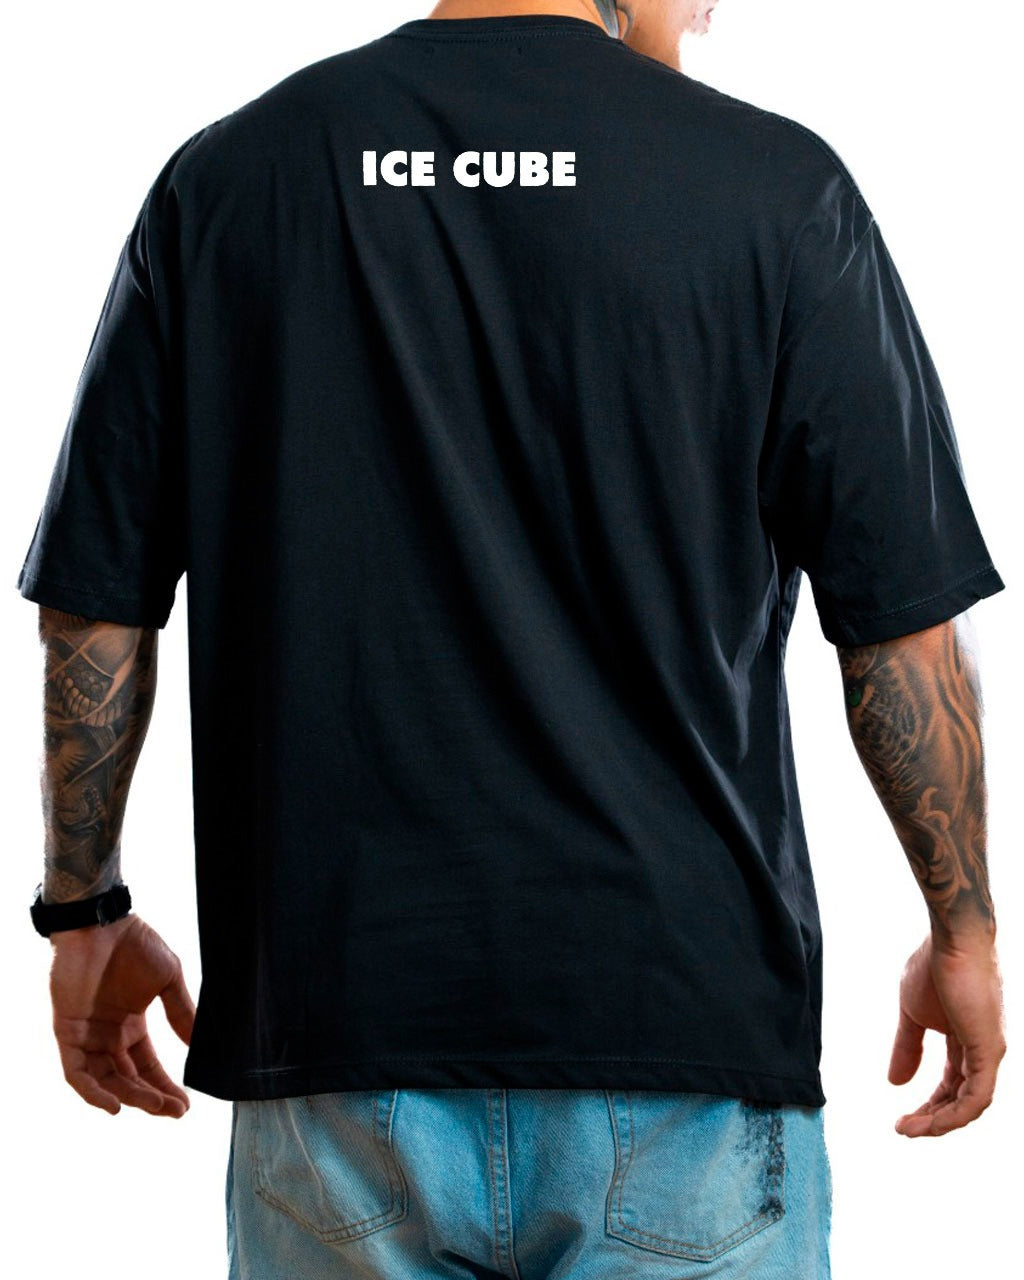 Oversize negra ice cube fire - Stark Brand